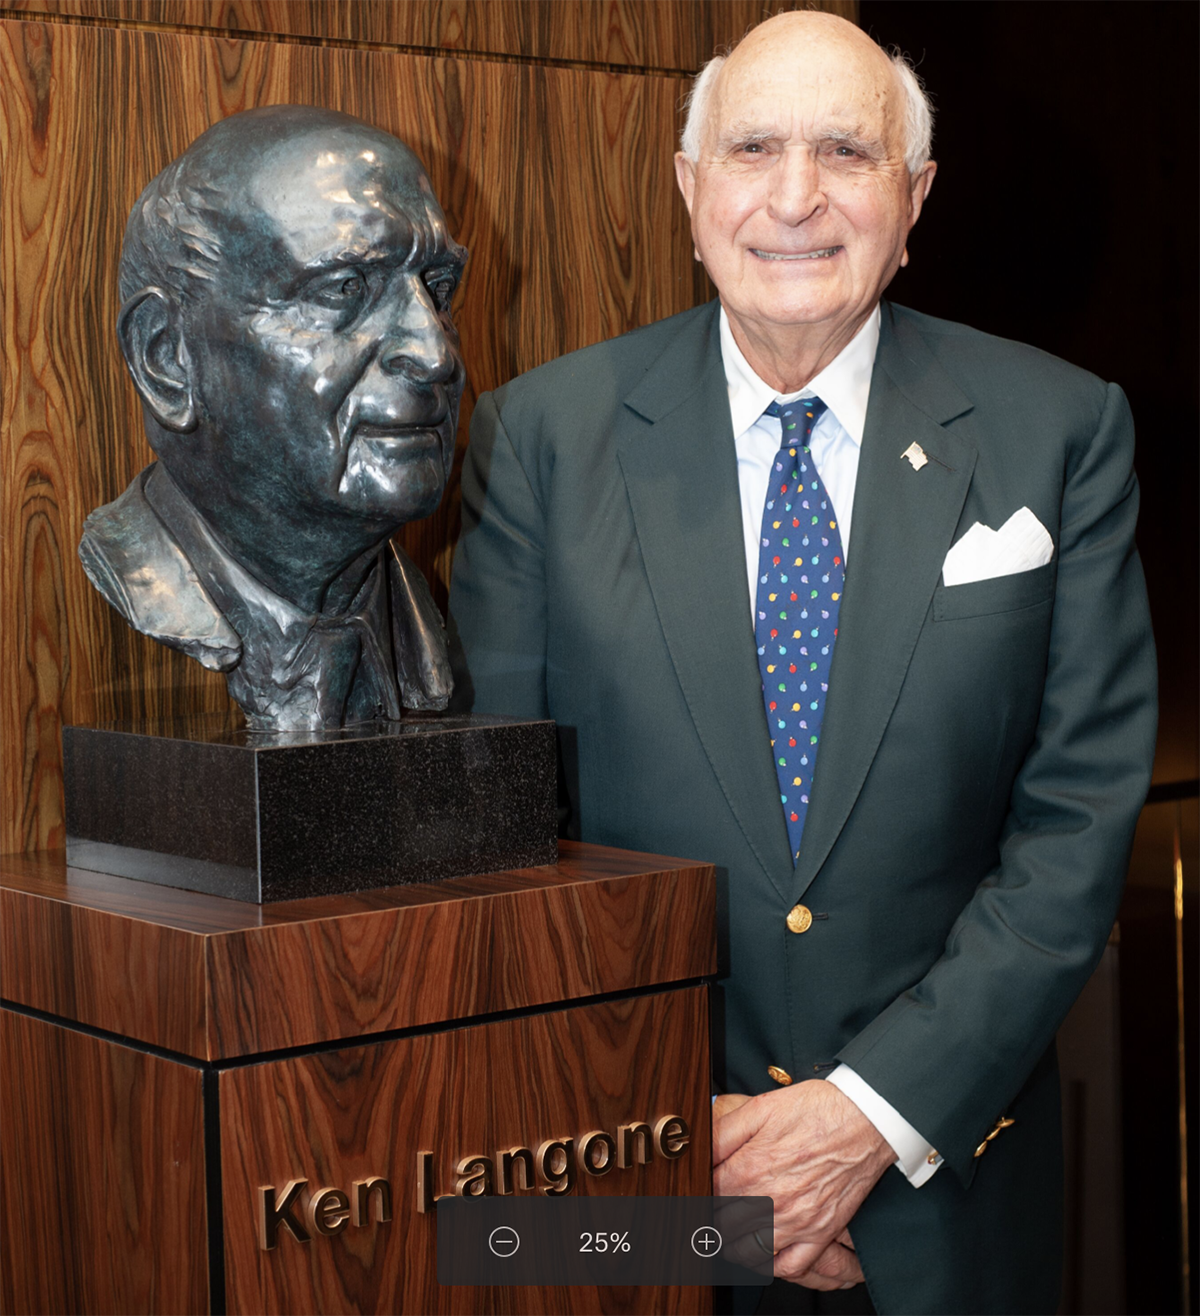 Ken Langone, sculptor